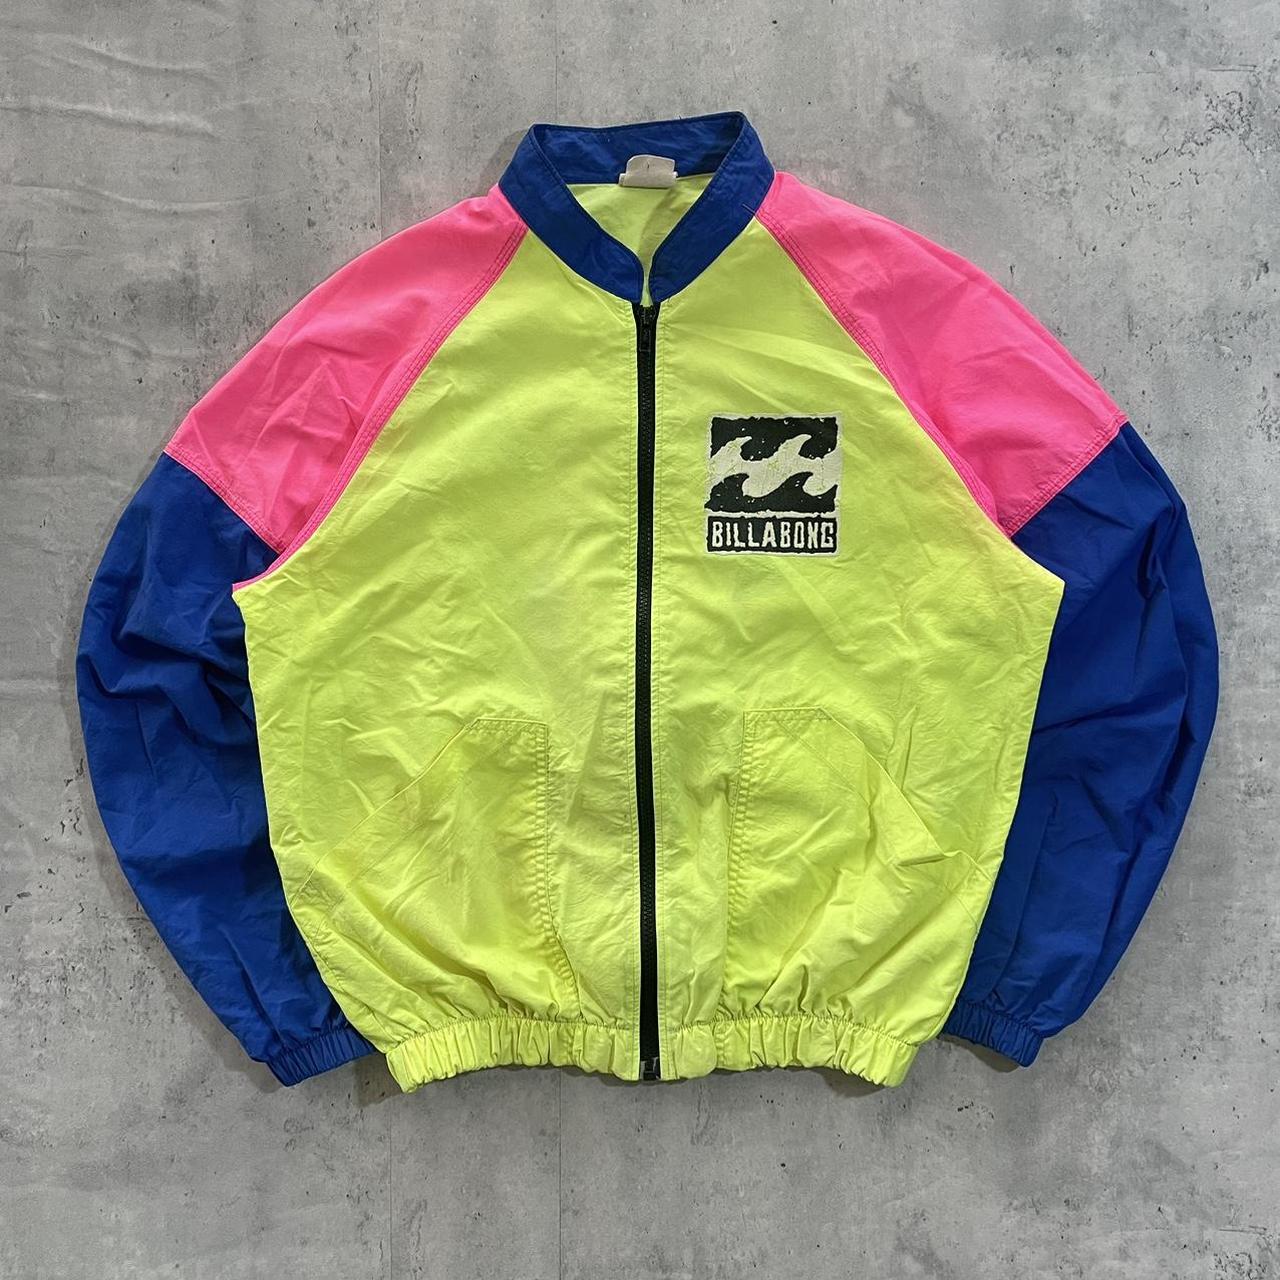 Vintage billabong nylon jacket 80s colorful vibrant... - Depop